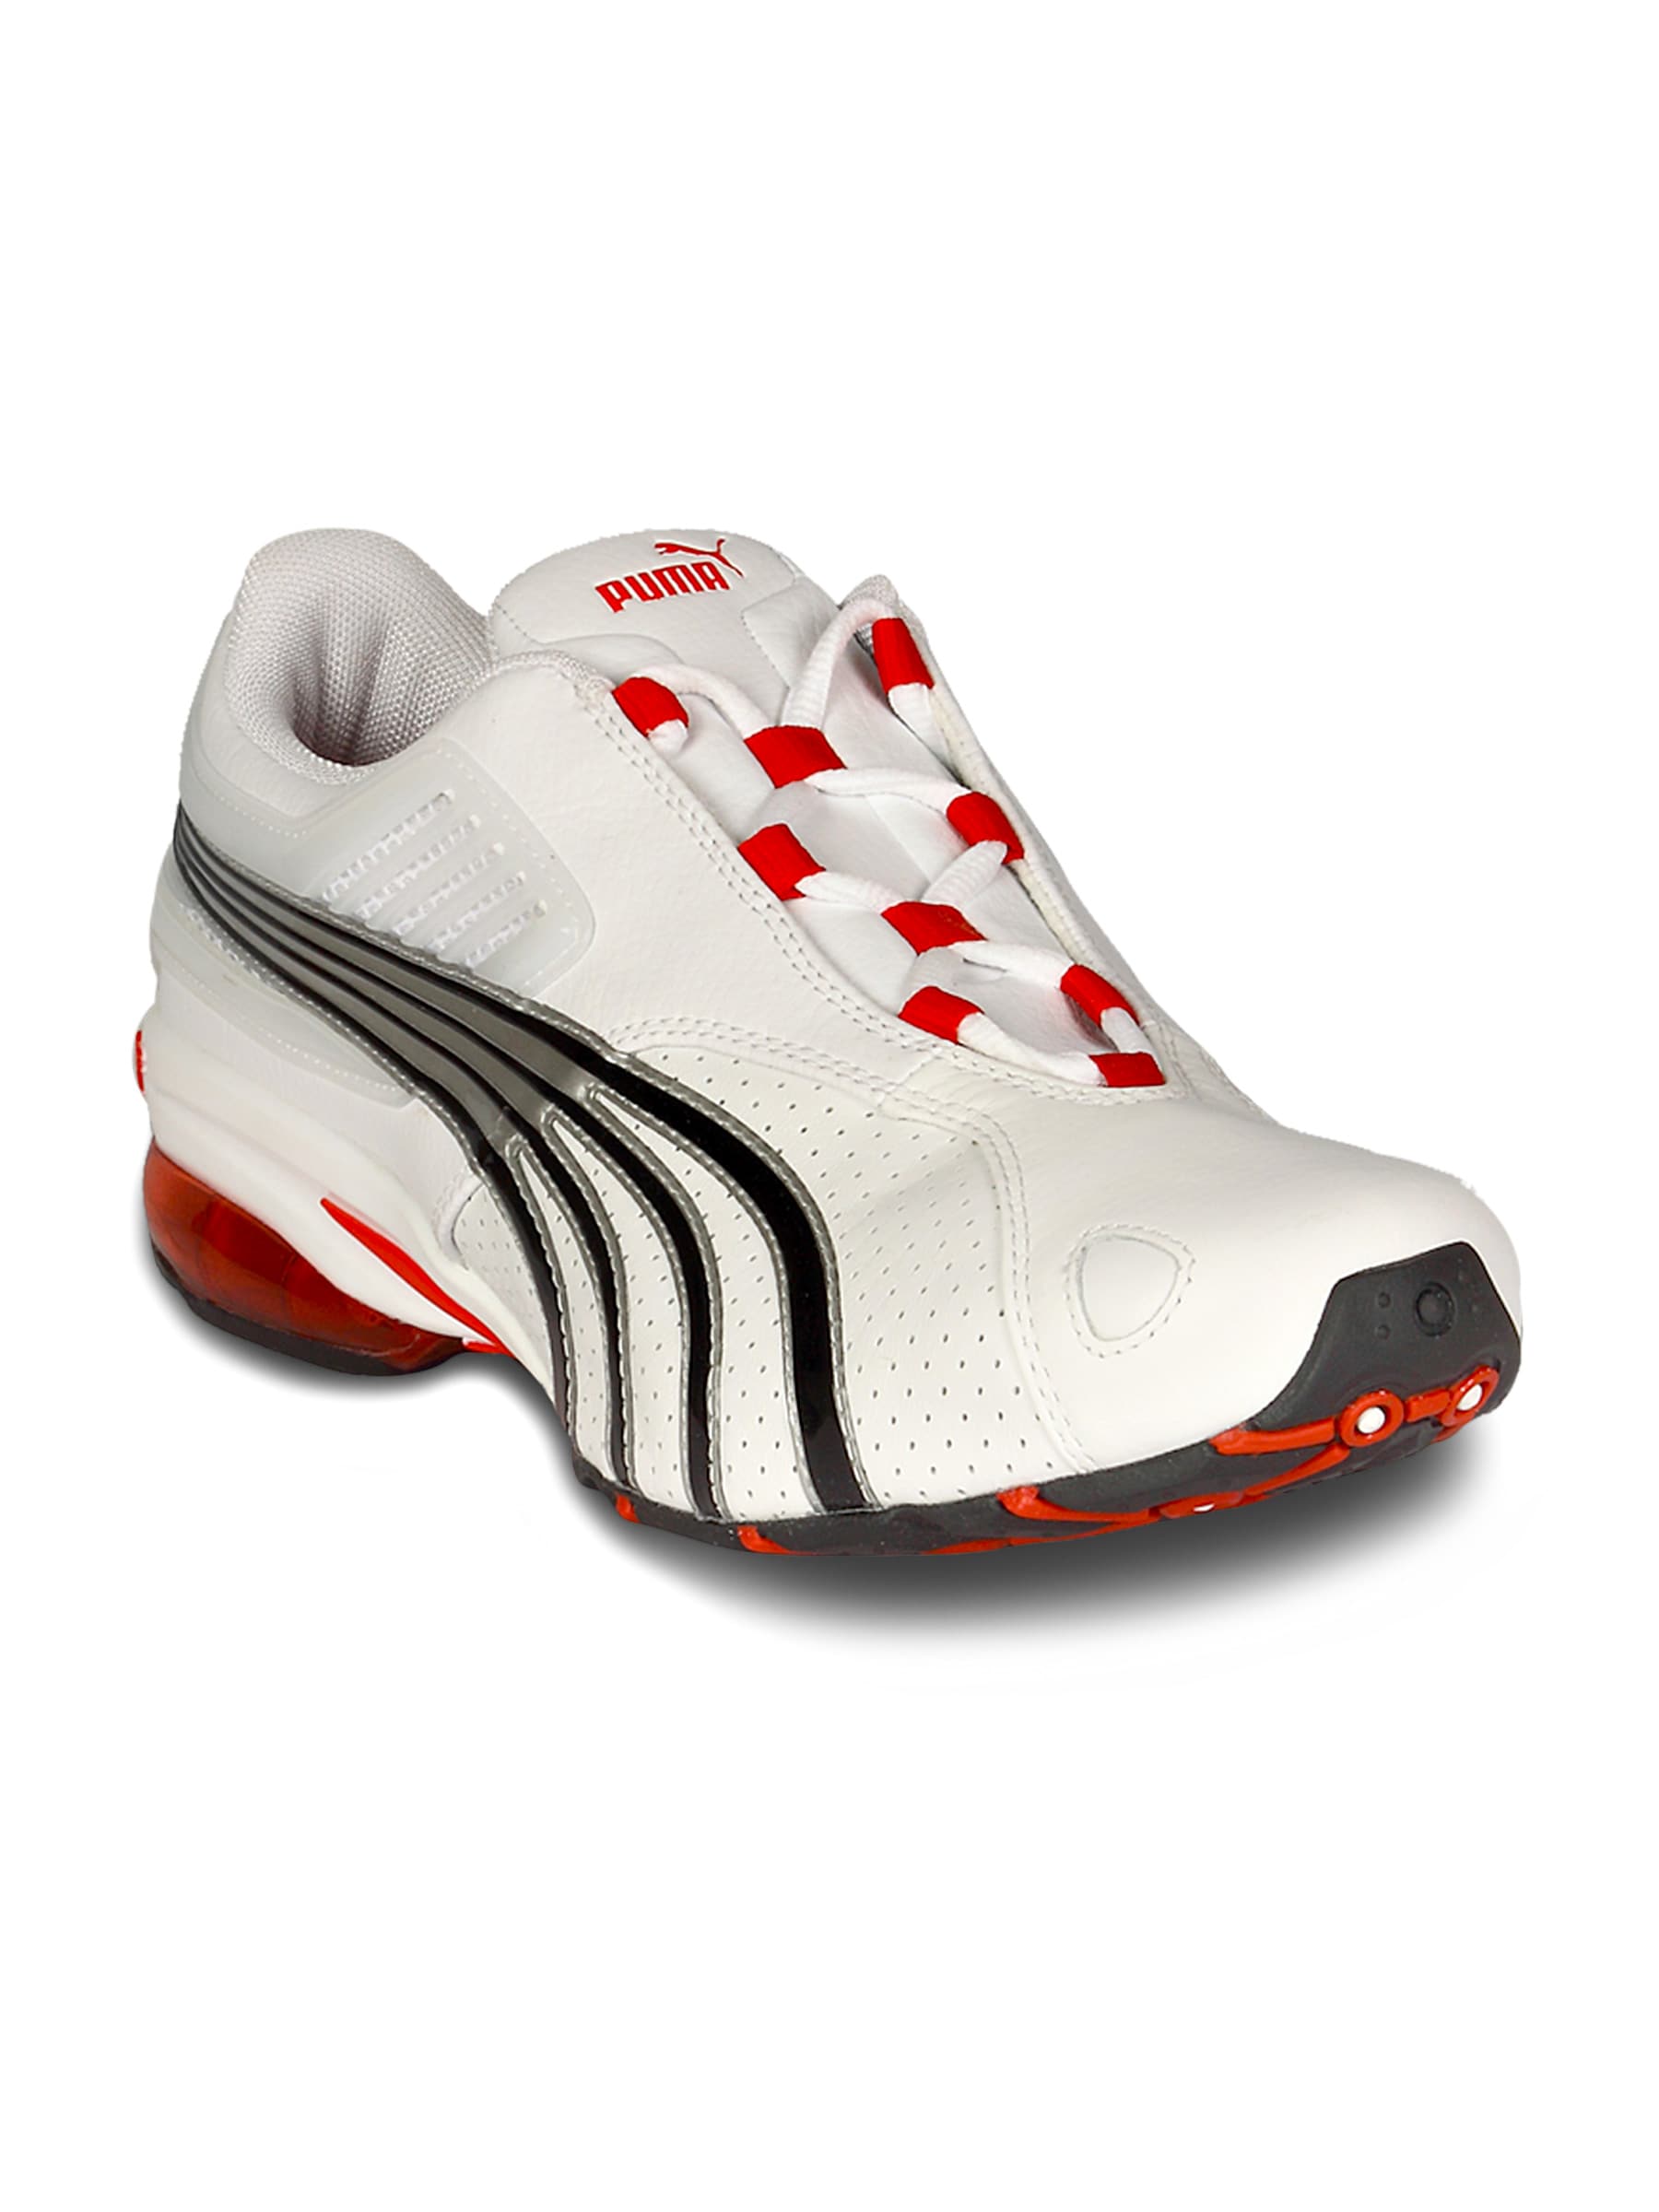 Puma Men's Tarun White Silver Red Shoe